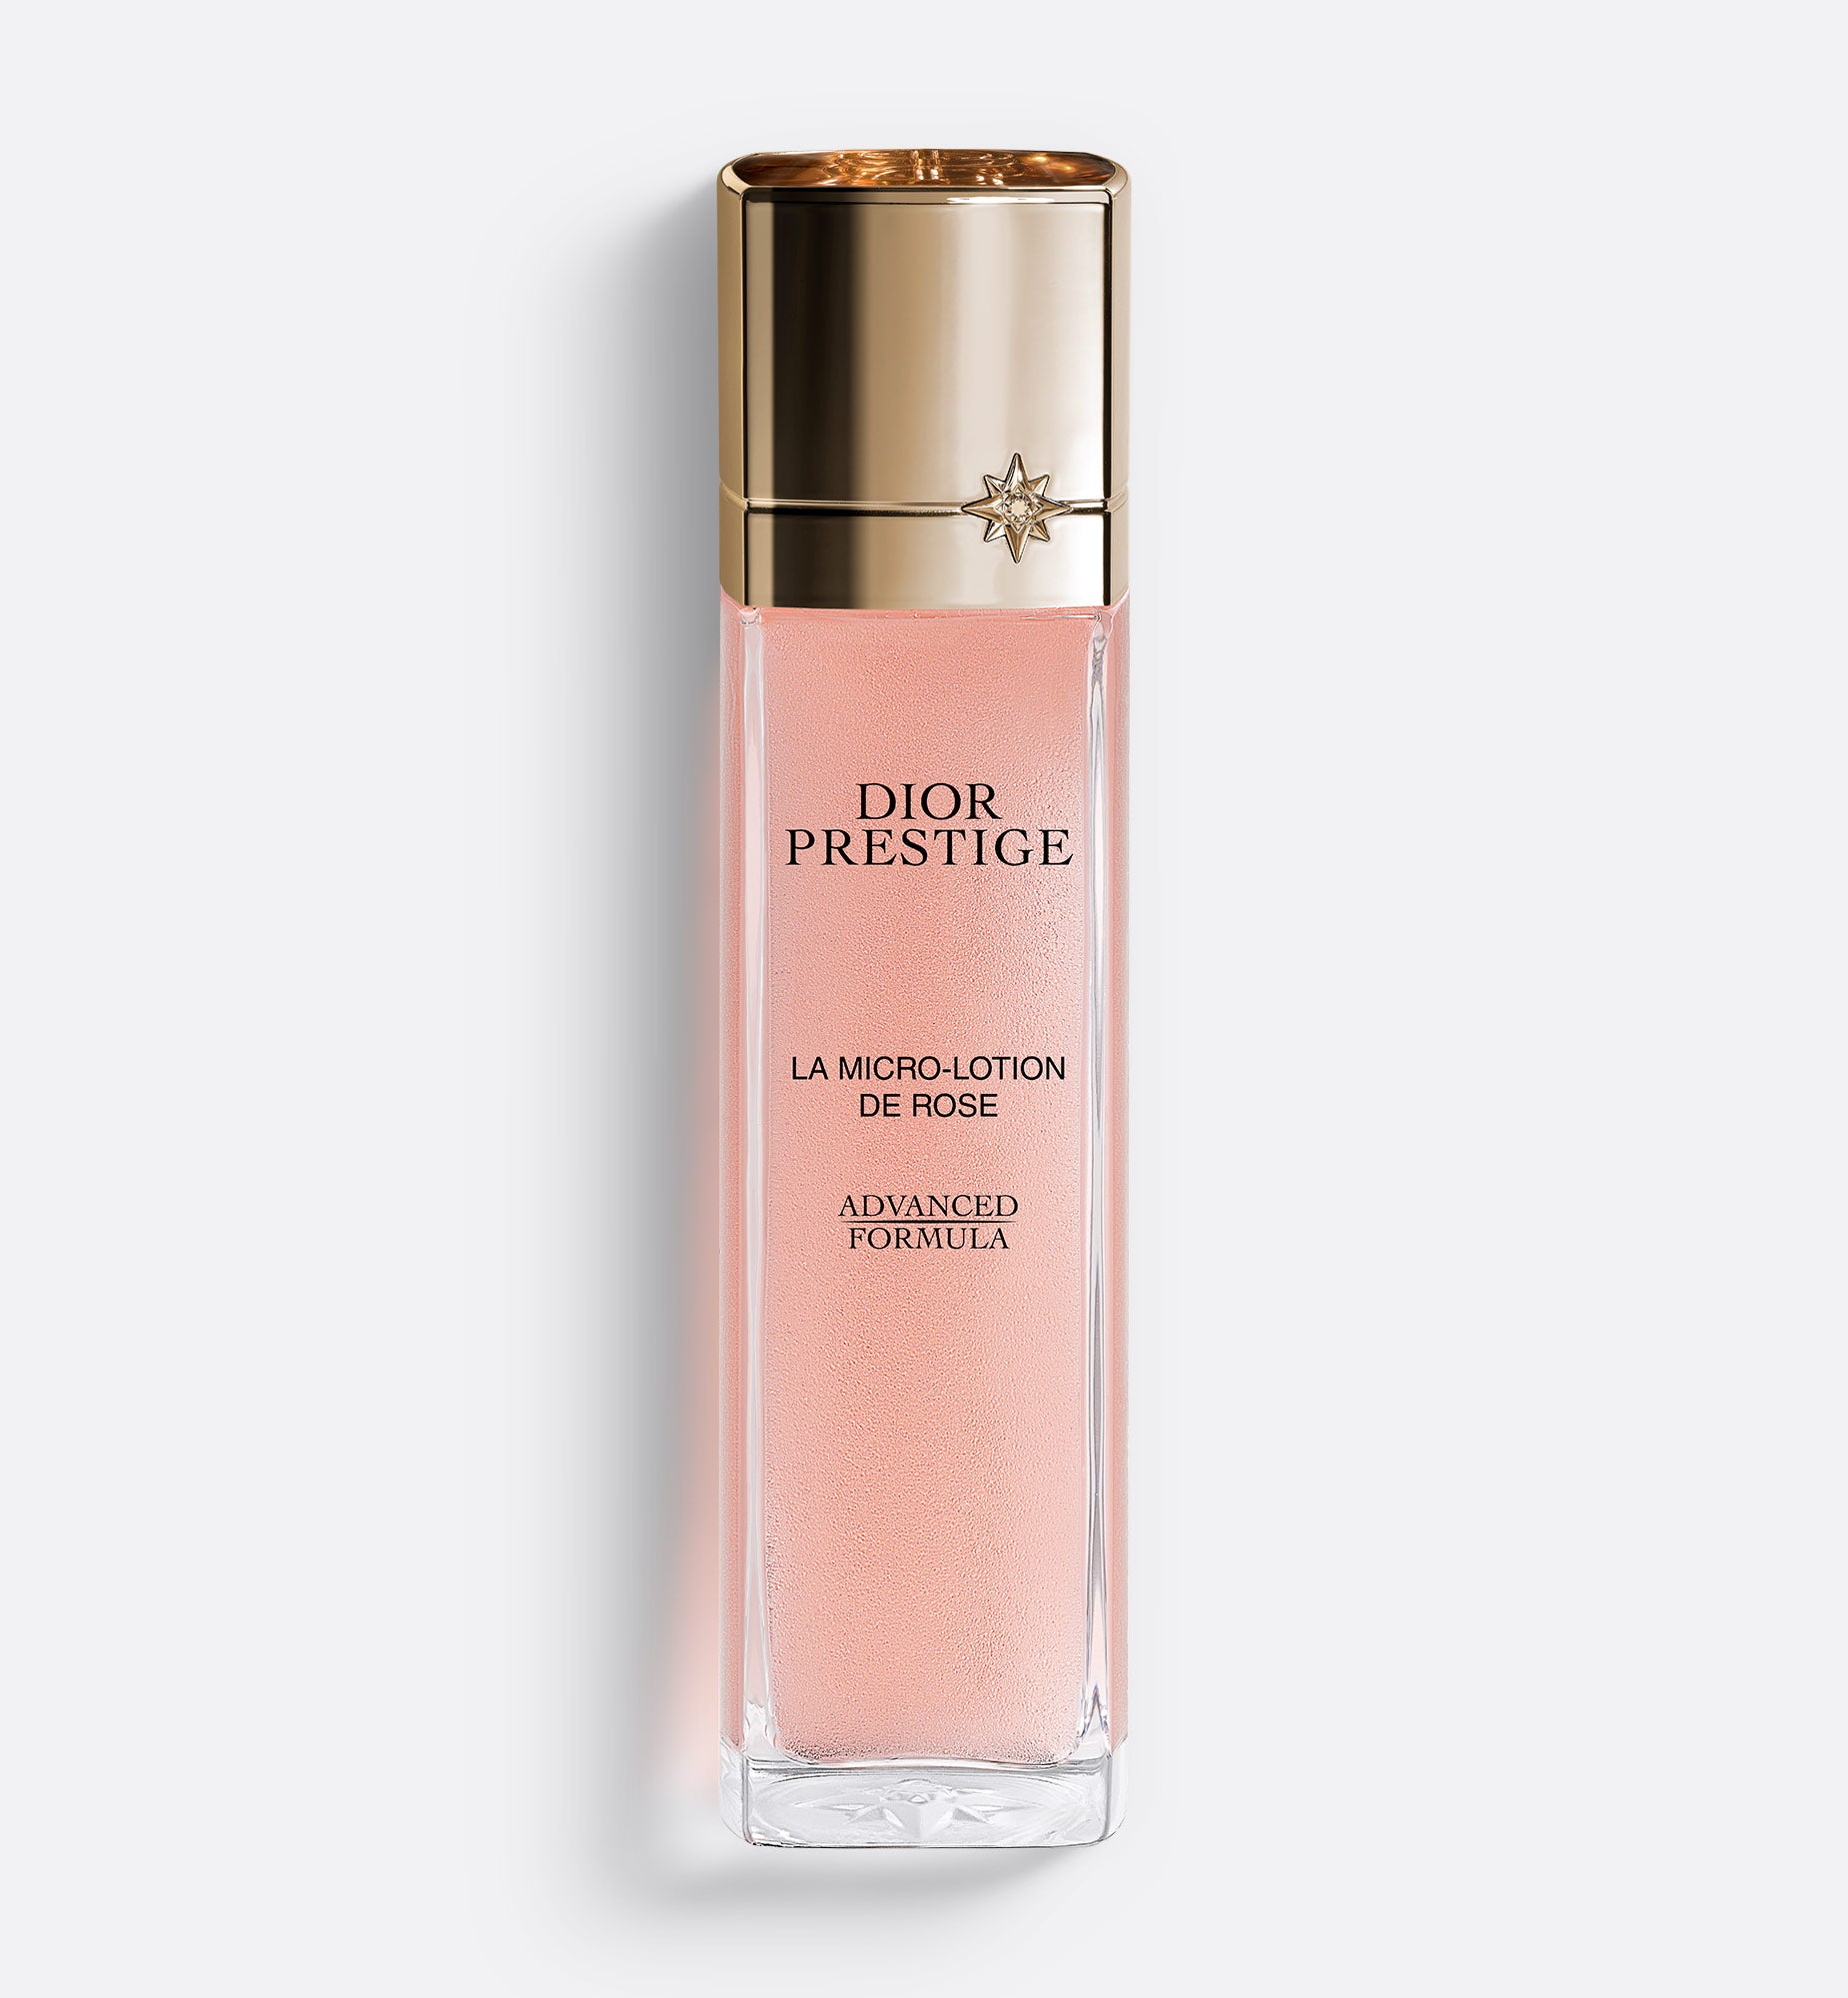 Dior Prestige La Micro-Lotion de Rose Advanced Formula | Rebalancing Lotion for Face and Neck - Rose de Granville Yeast Extract